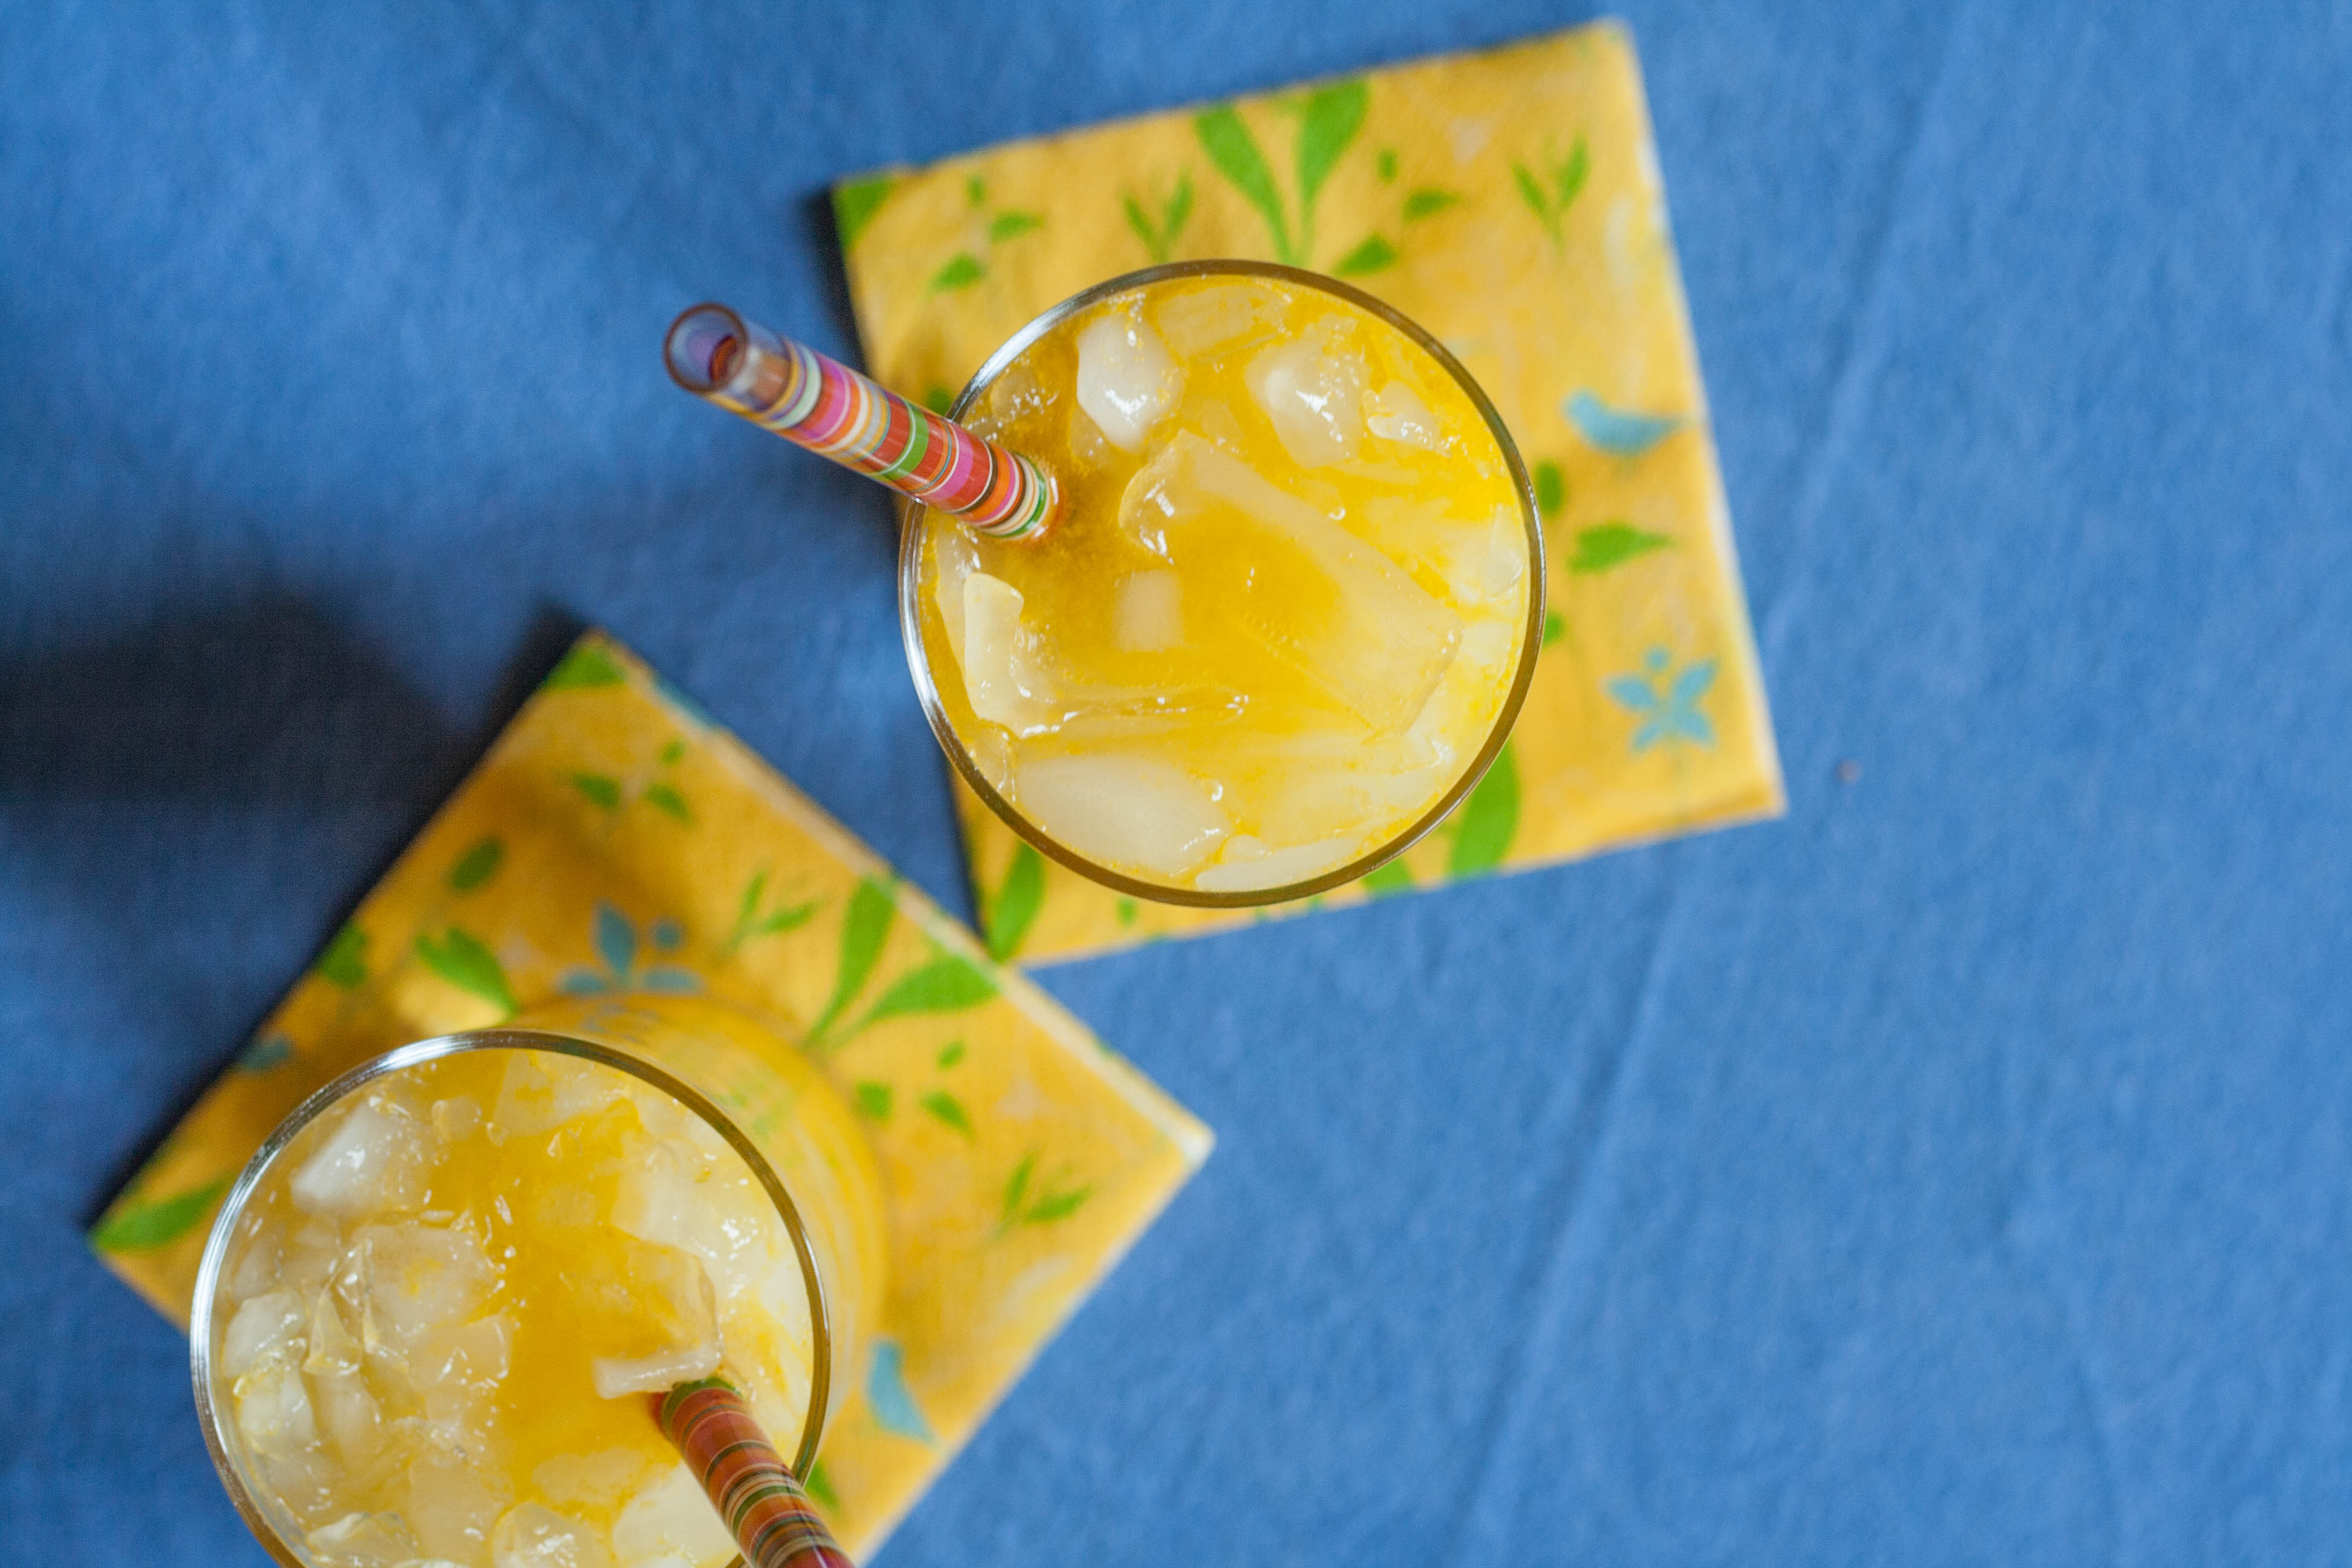 Orange Crush Cocktail Recipe - How To Make An Orange Crush